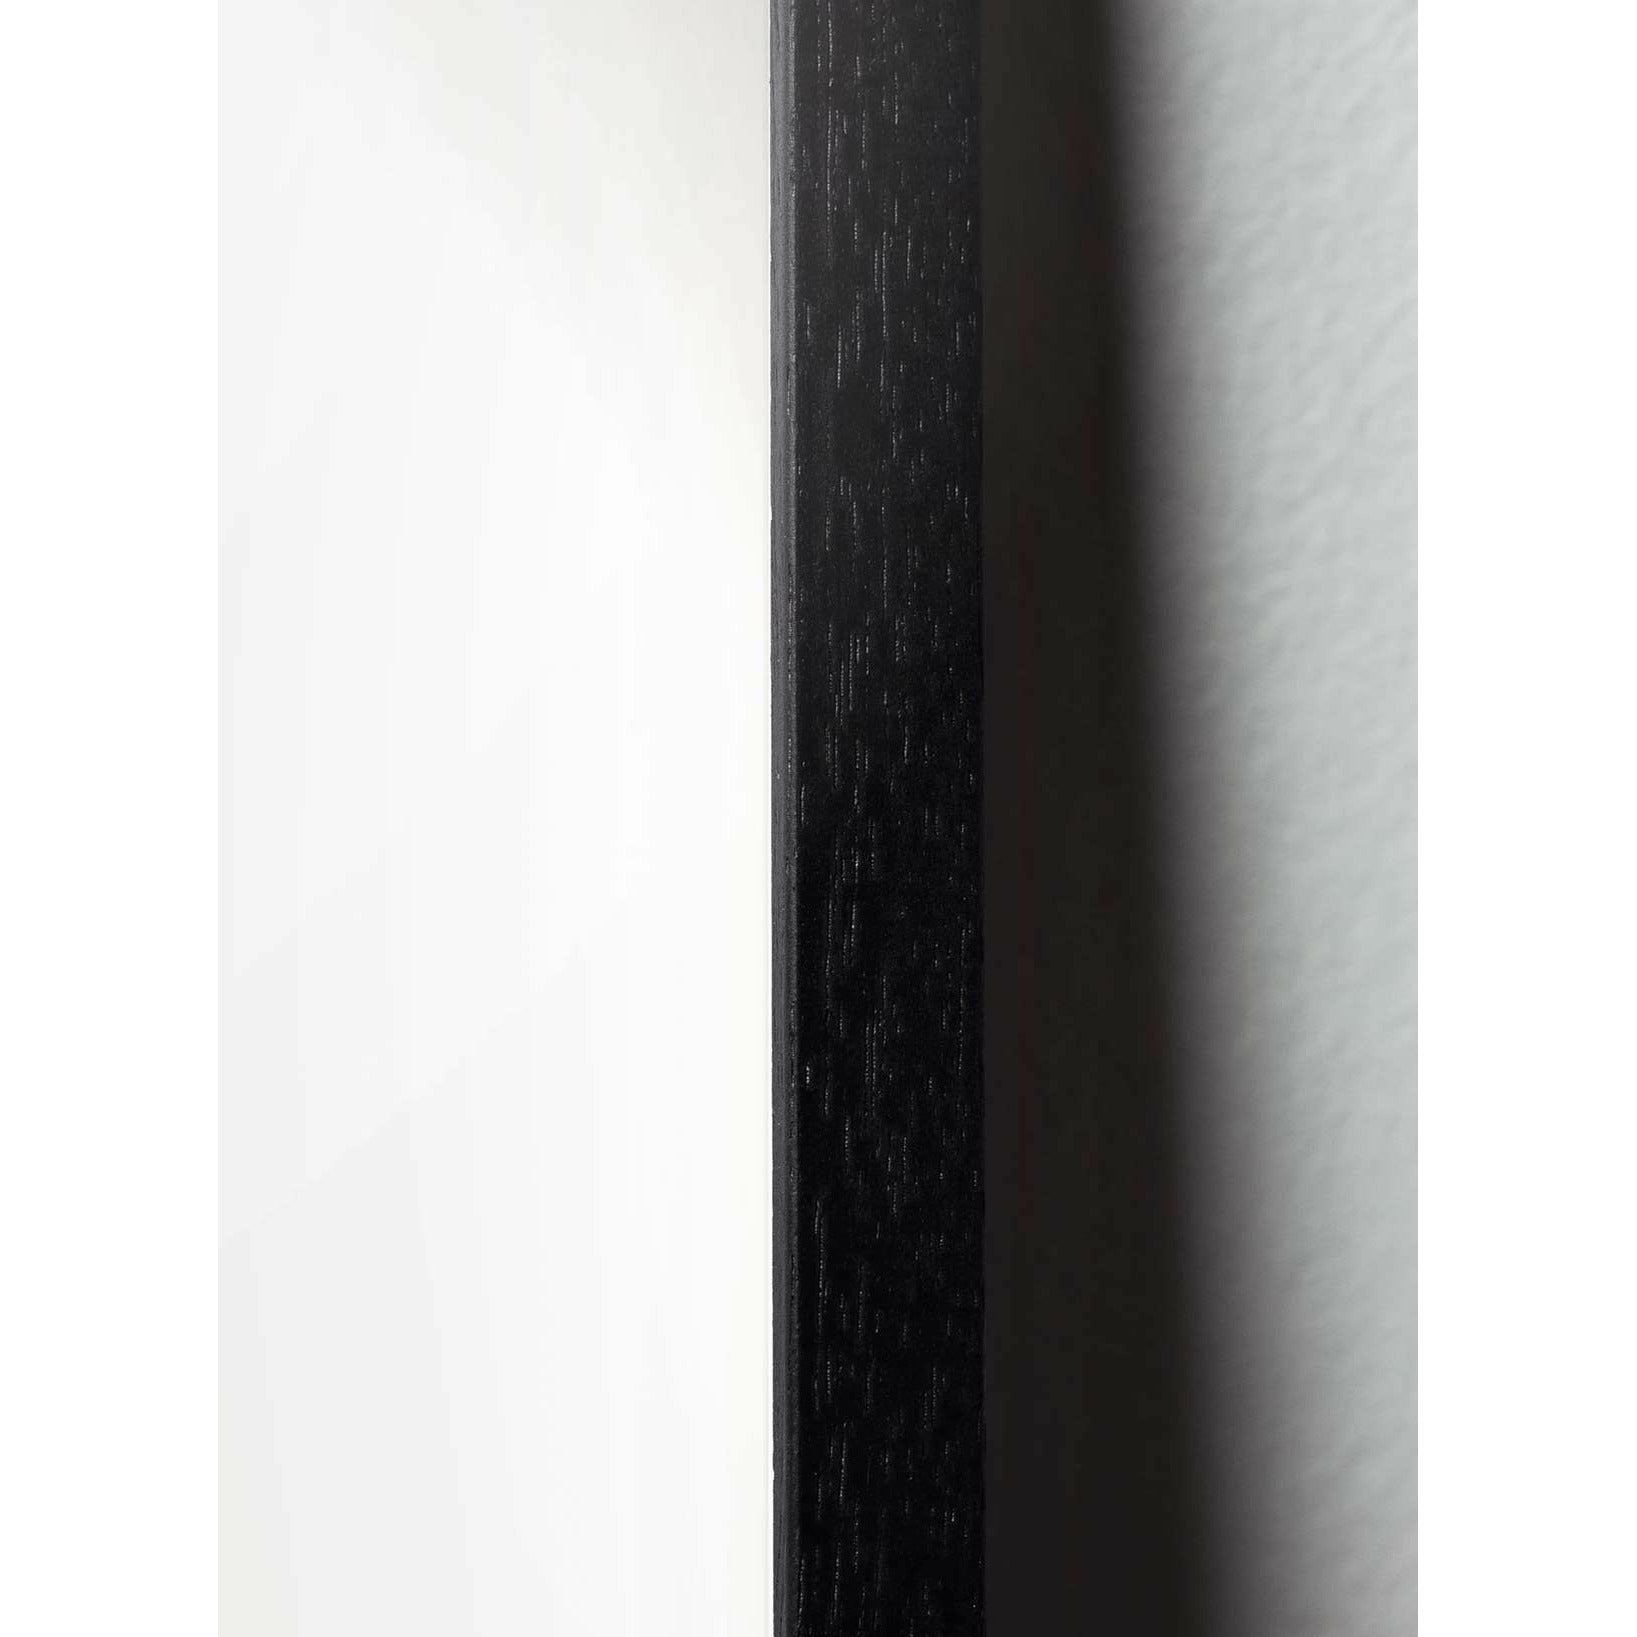 Brainchild Myrklassisk affisch, ram i svart målad trä A5, vit bakgrund